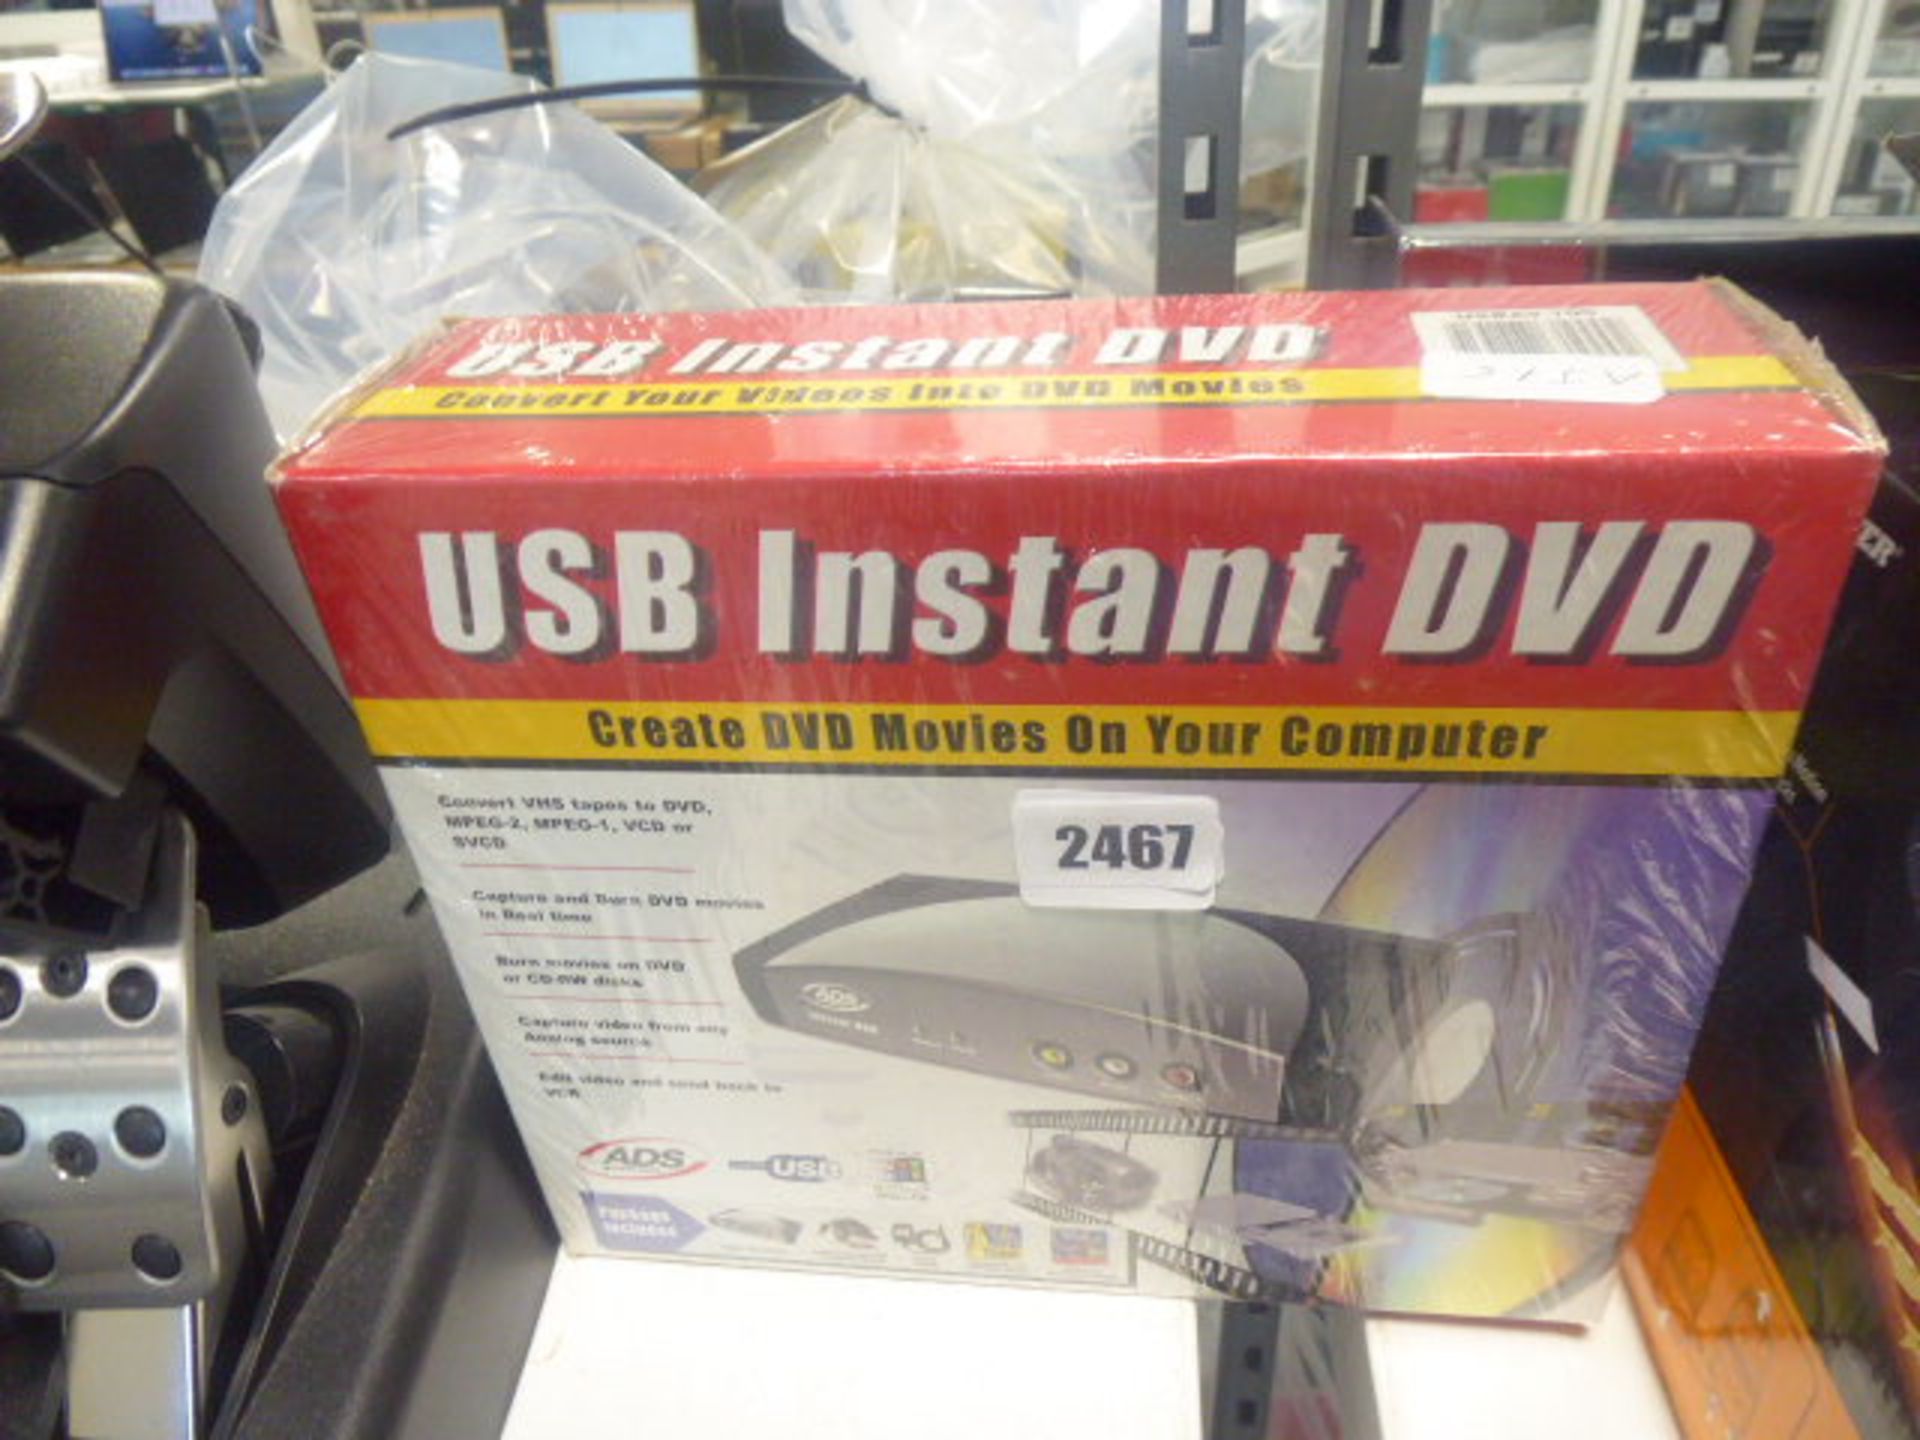 2368 USB Instant DVD Unit in box